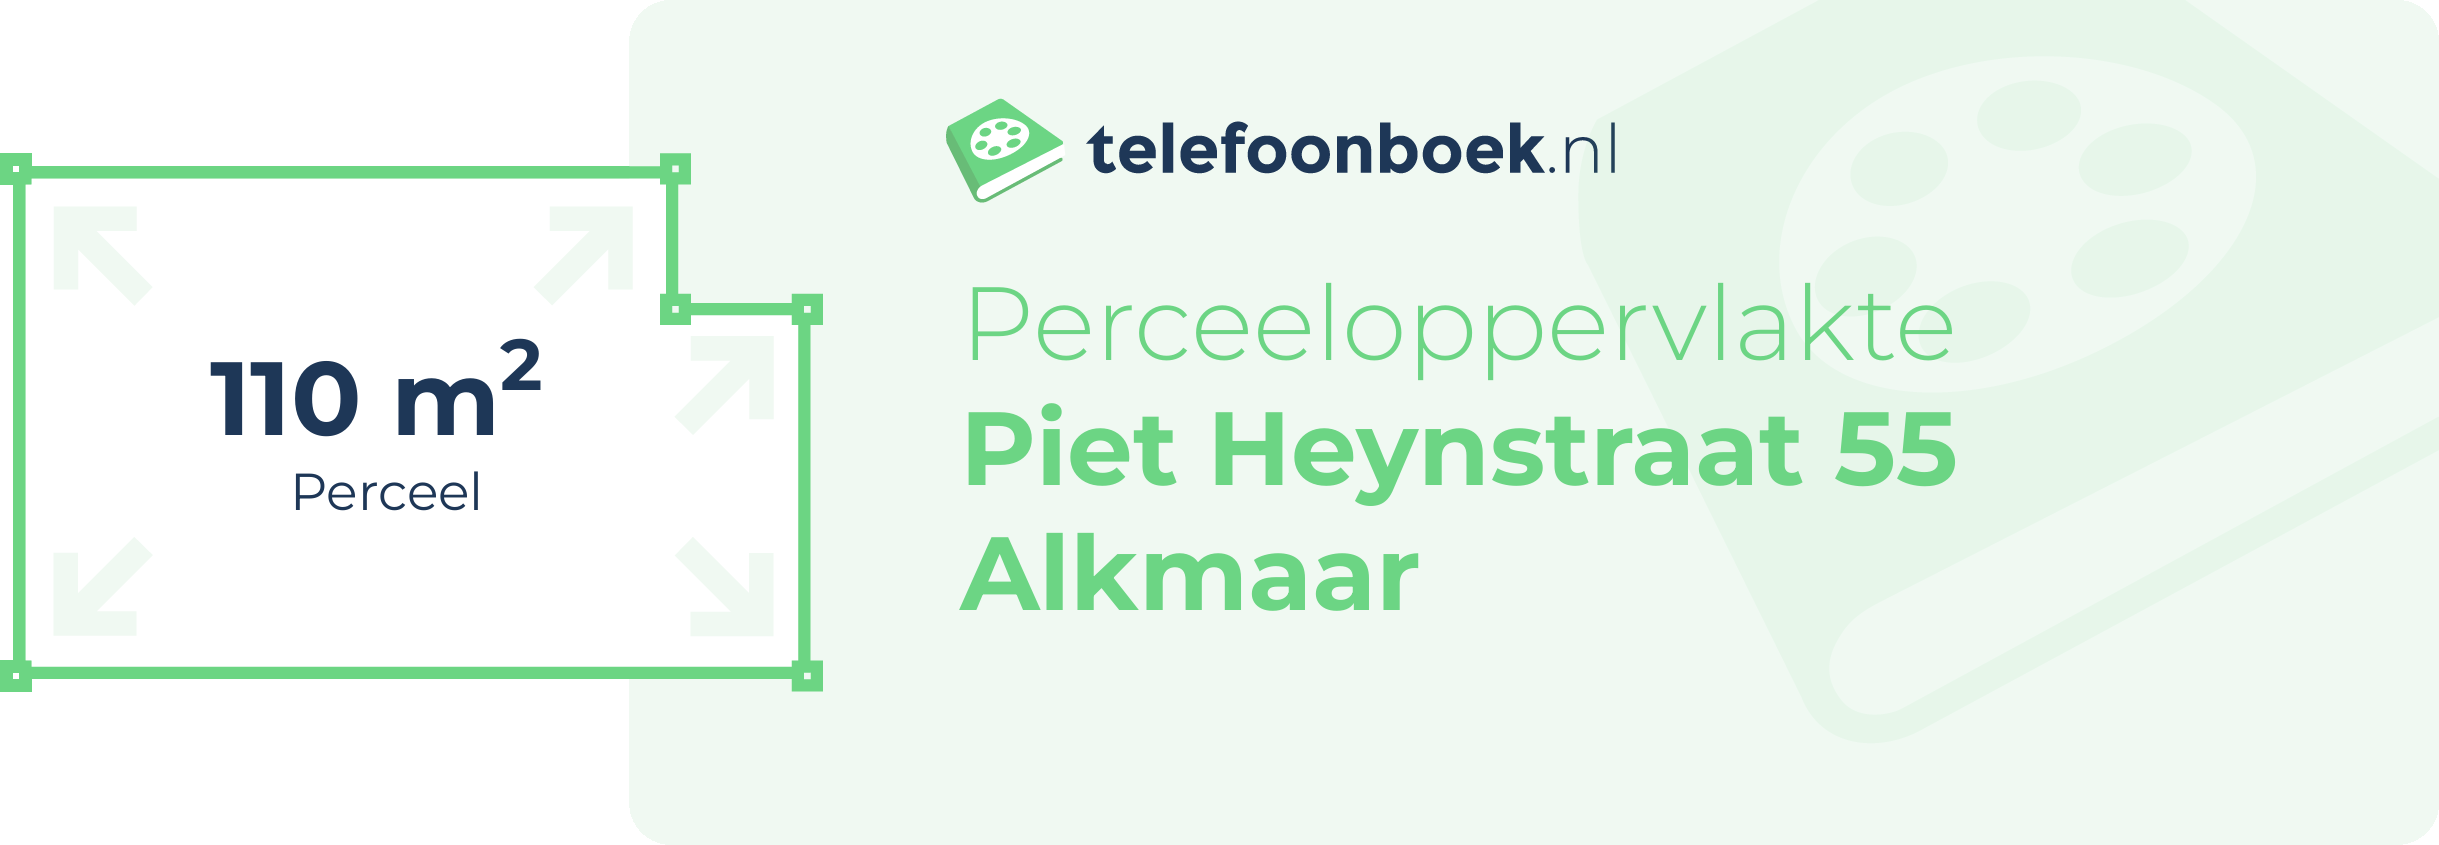 Perceeloppervlakte Piet Heynstraat 55 Alkmaar